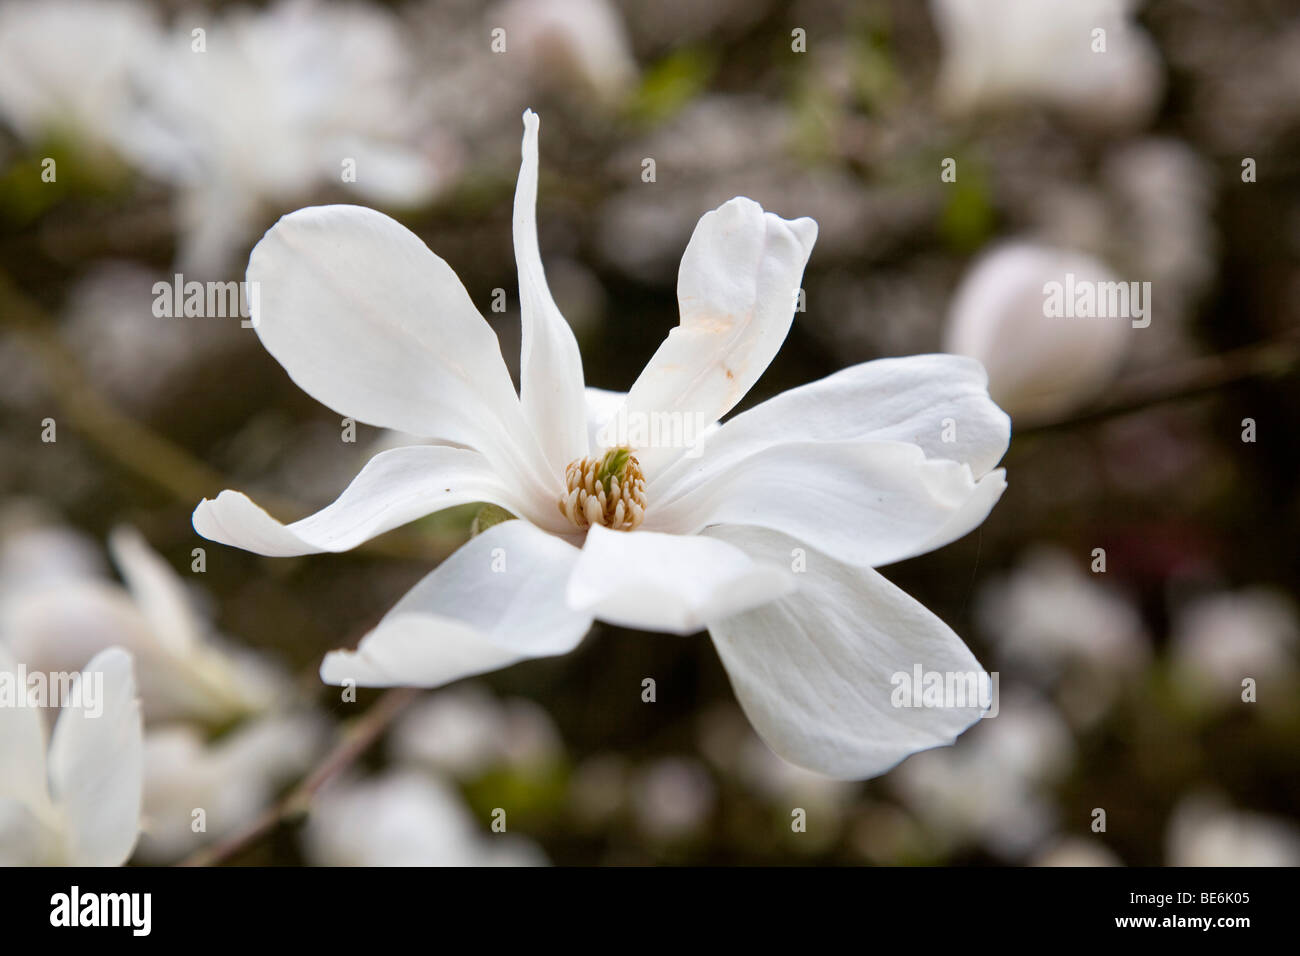 trebah garden; cornwall; magnolia Stock Photo